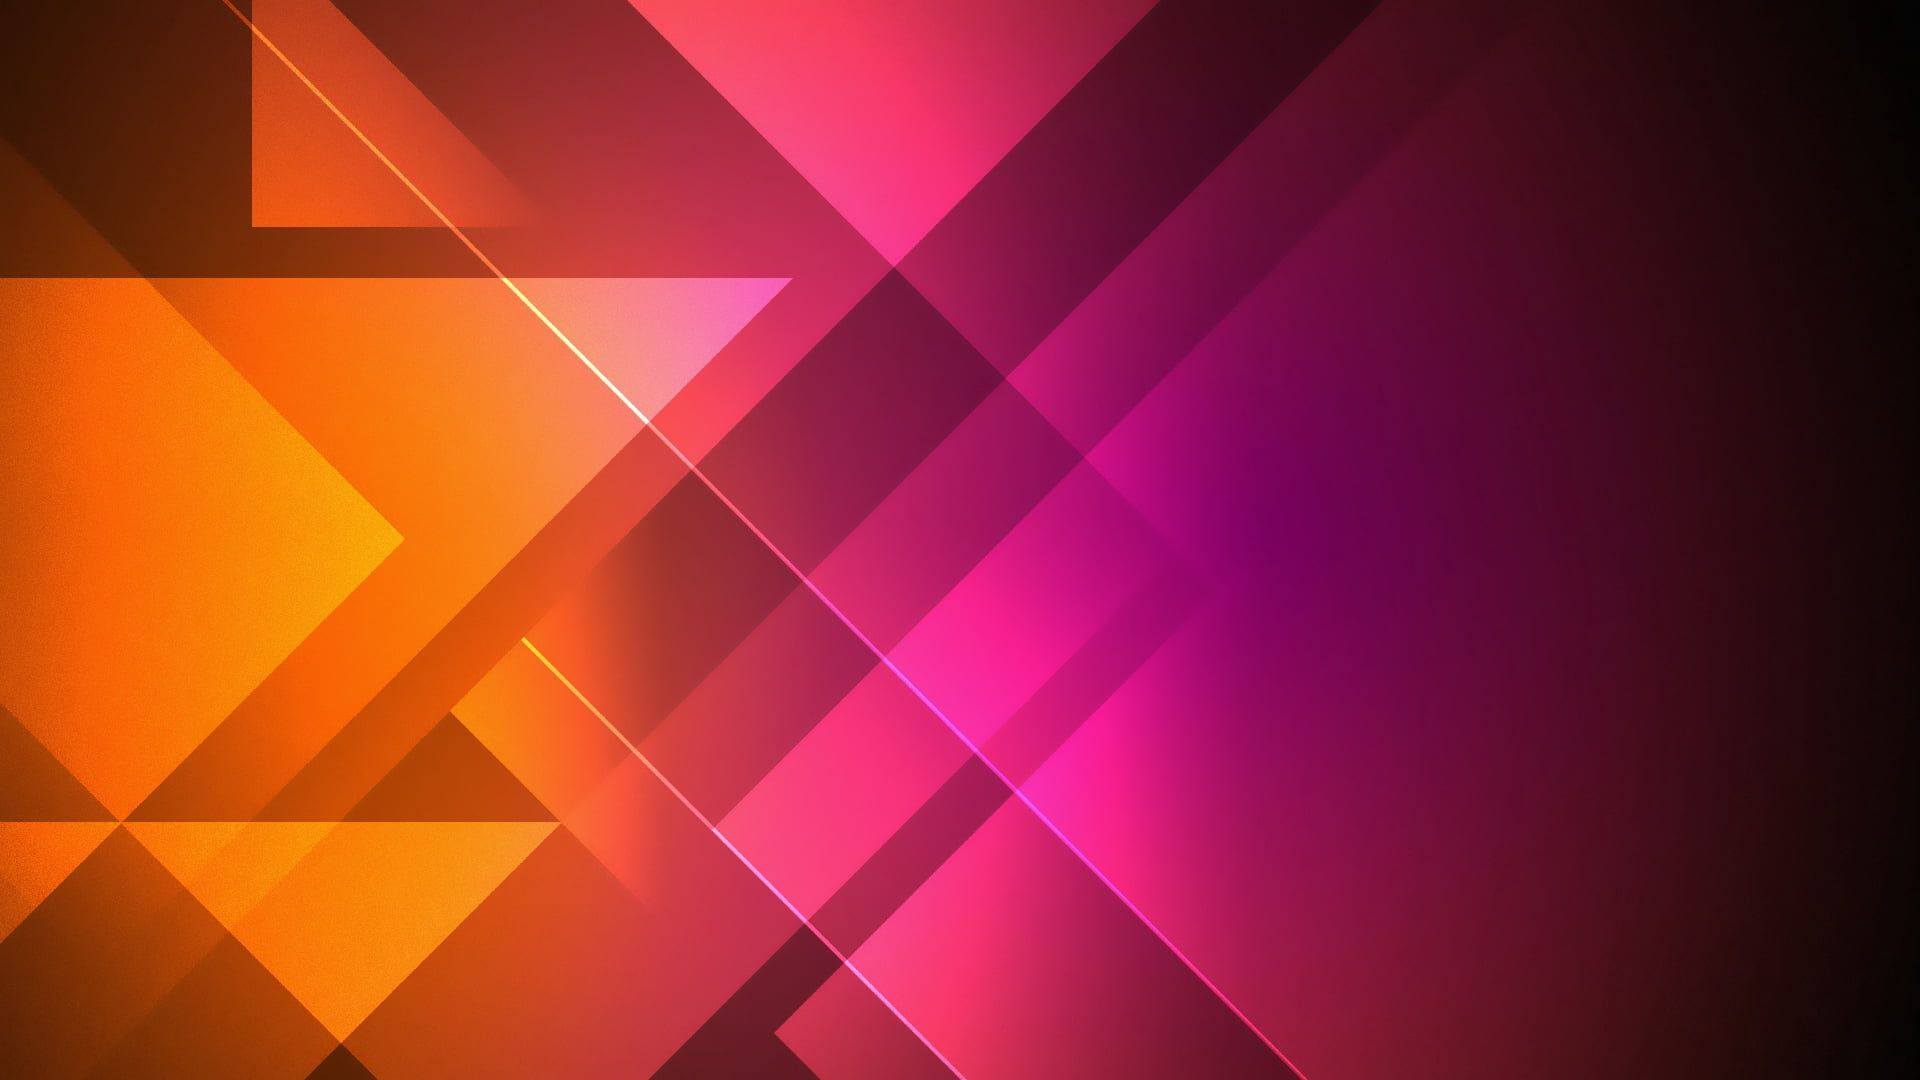 1920x1080 pink and orange illustration #stains #abstract #dark #light #1080P # wallpaper #hdwallpaper #desktop | Abstract wallpaper, Abstract, Dark wallpaper